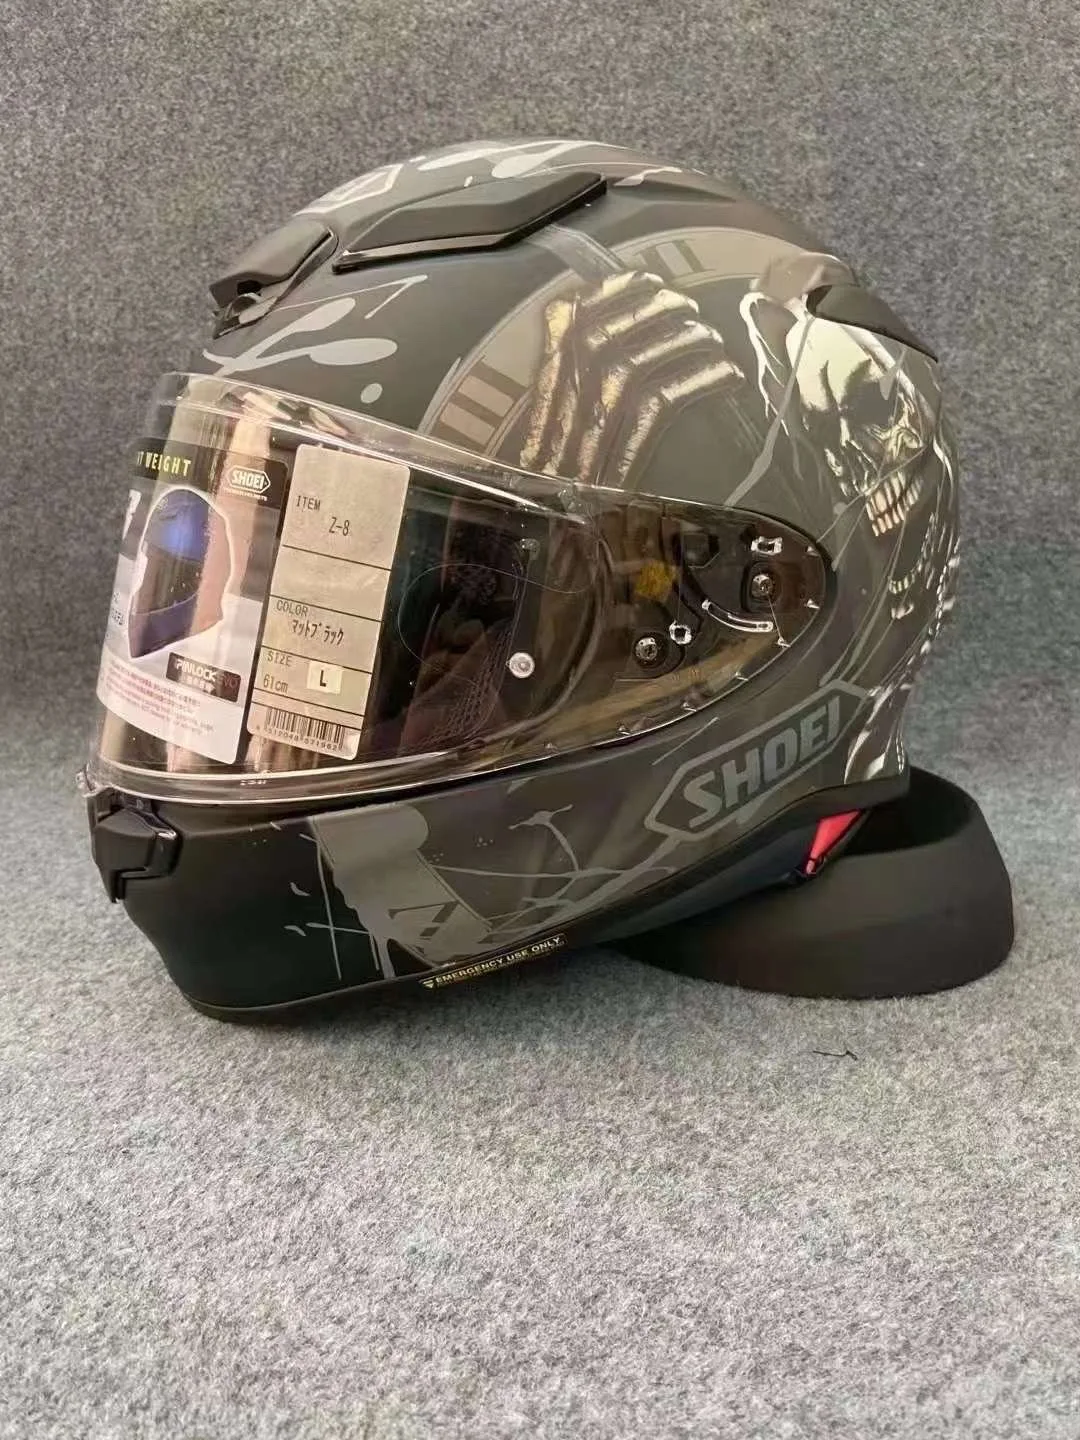 Helmet Z8 Rf-1400 Faust Tc-5 Helmet Riding Motocross Racing 